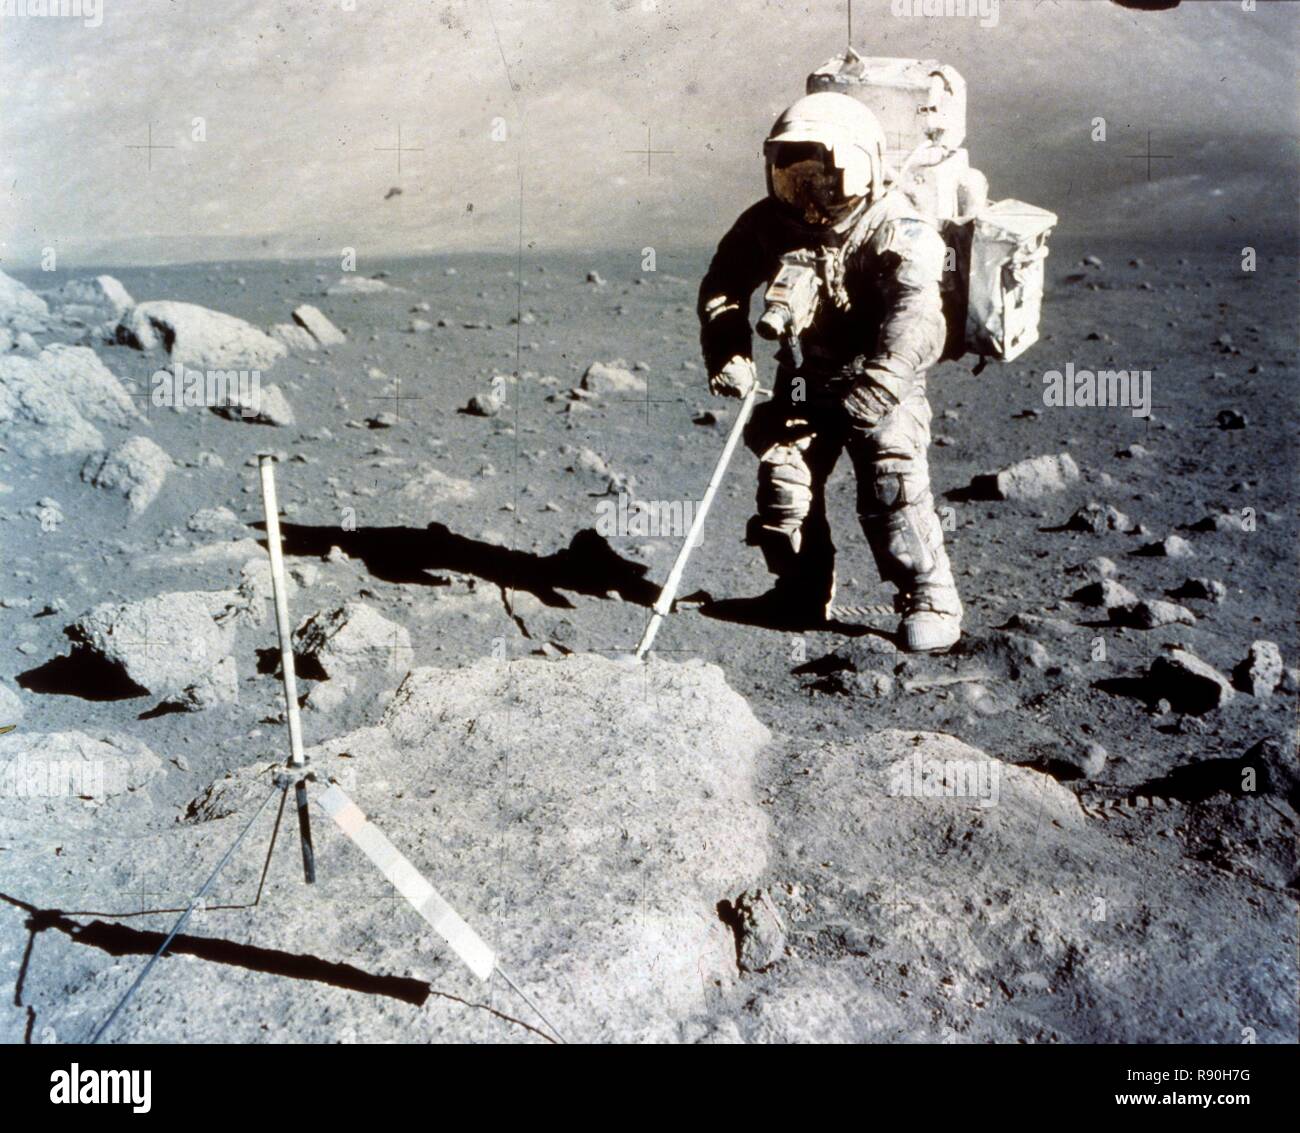 Harrison Schmitt works the scoop on the lunar surface, Apollo 17 mission, December 1972. Creator: NASA. Stock Photo